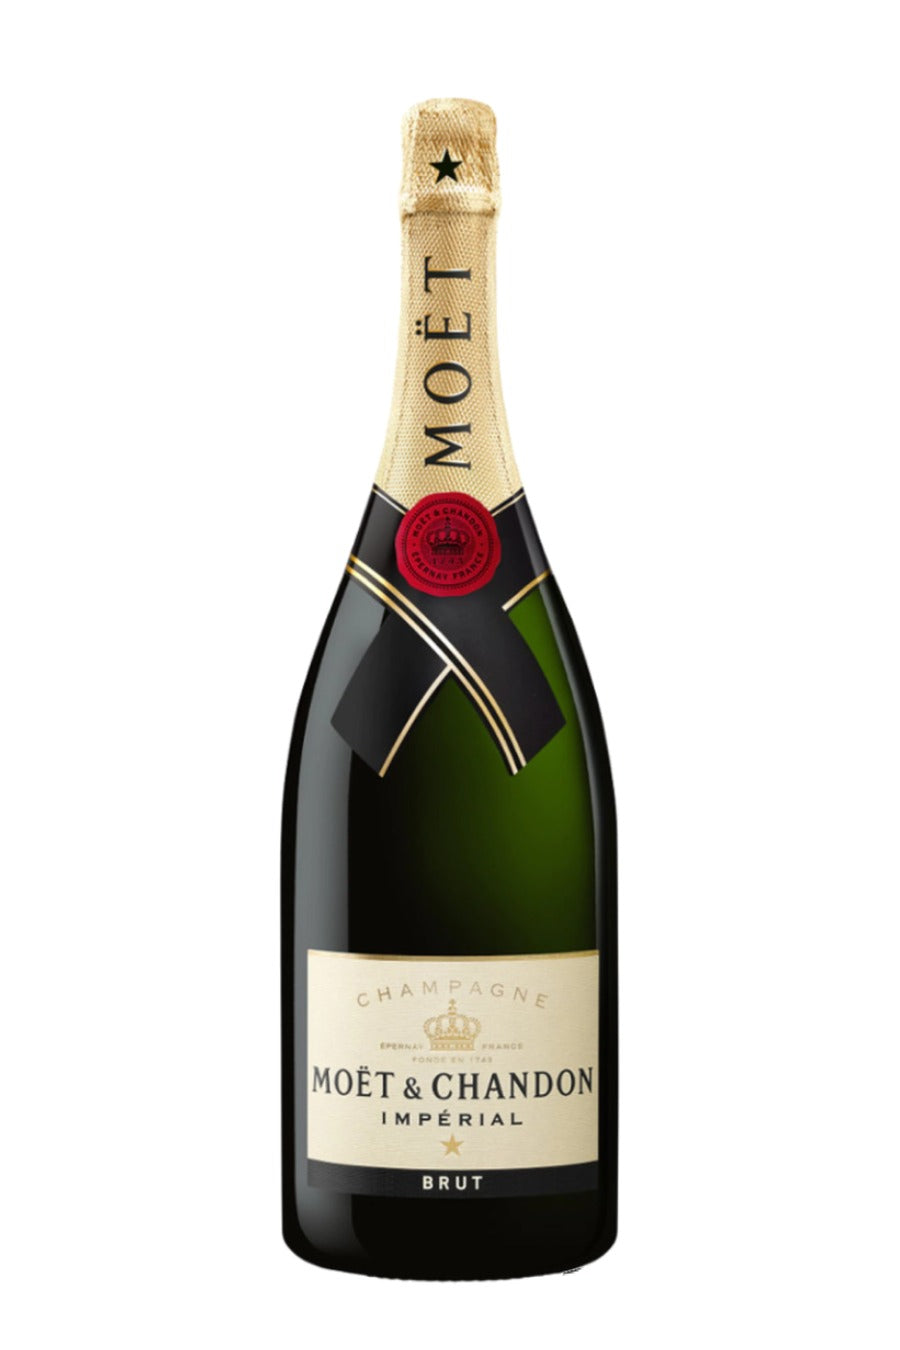 Chandon Sparkling Wine, Brut Classic, California, Champagne & Sparkling  Wines